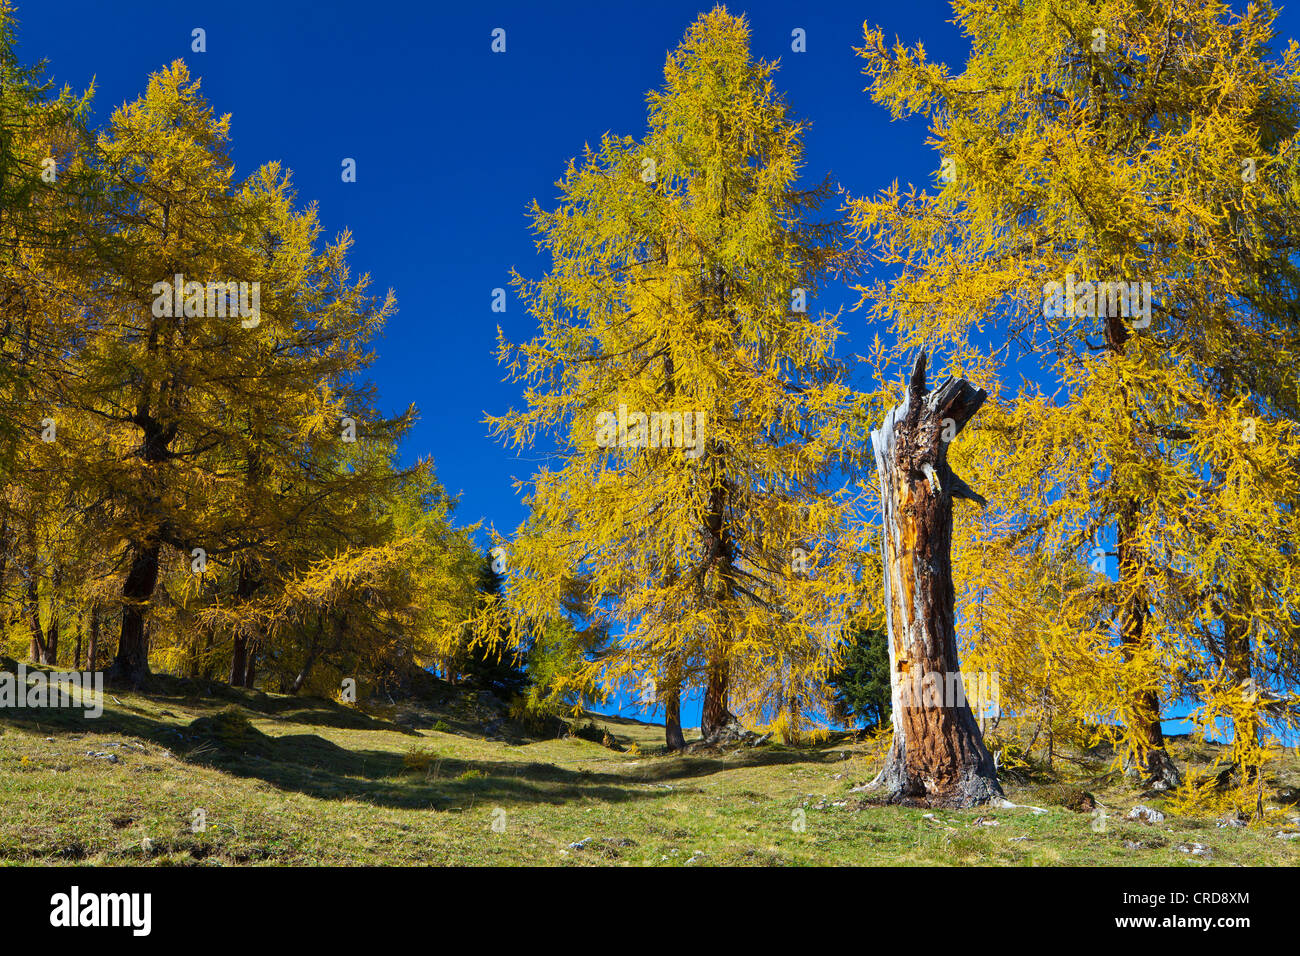 Larch trees in autumn, Obsteig, Austria Stock Photo